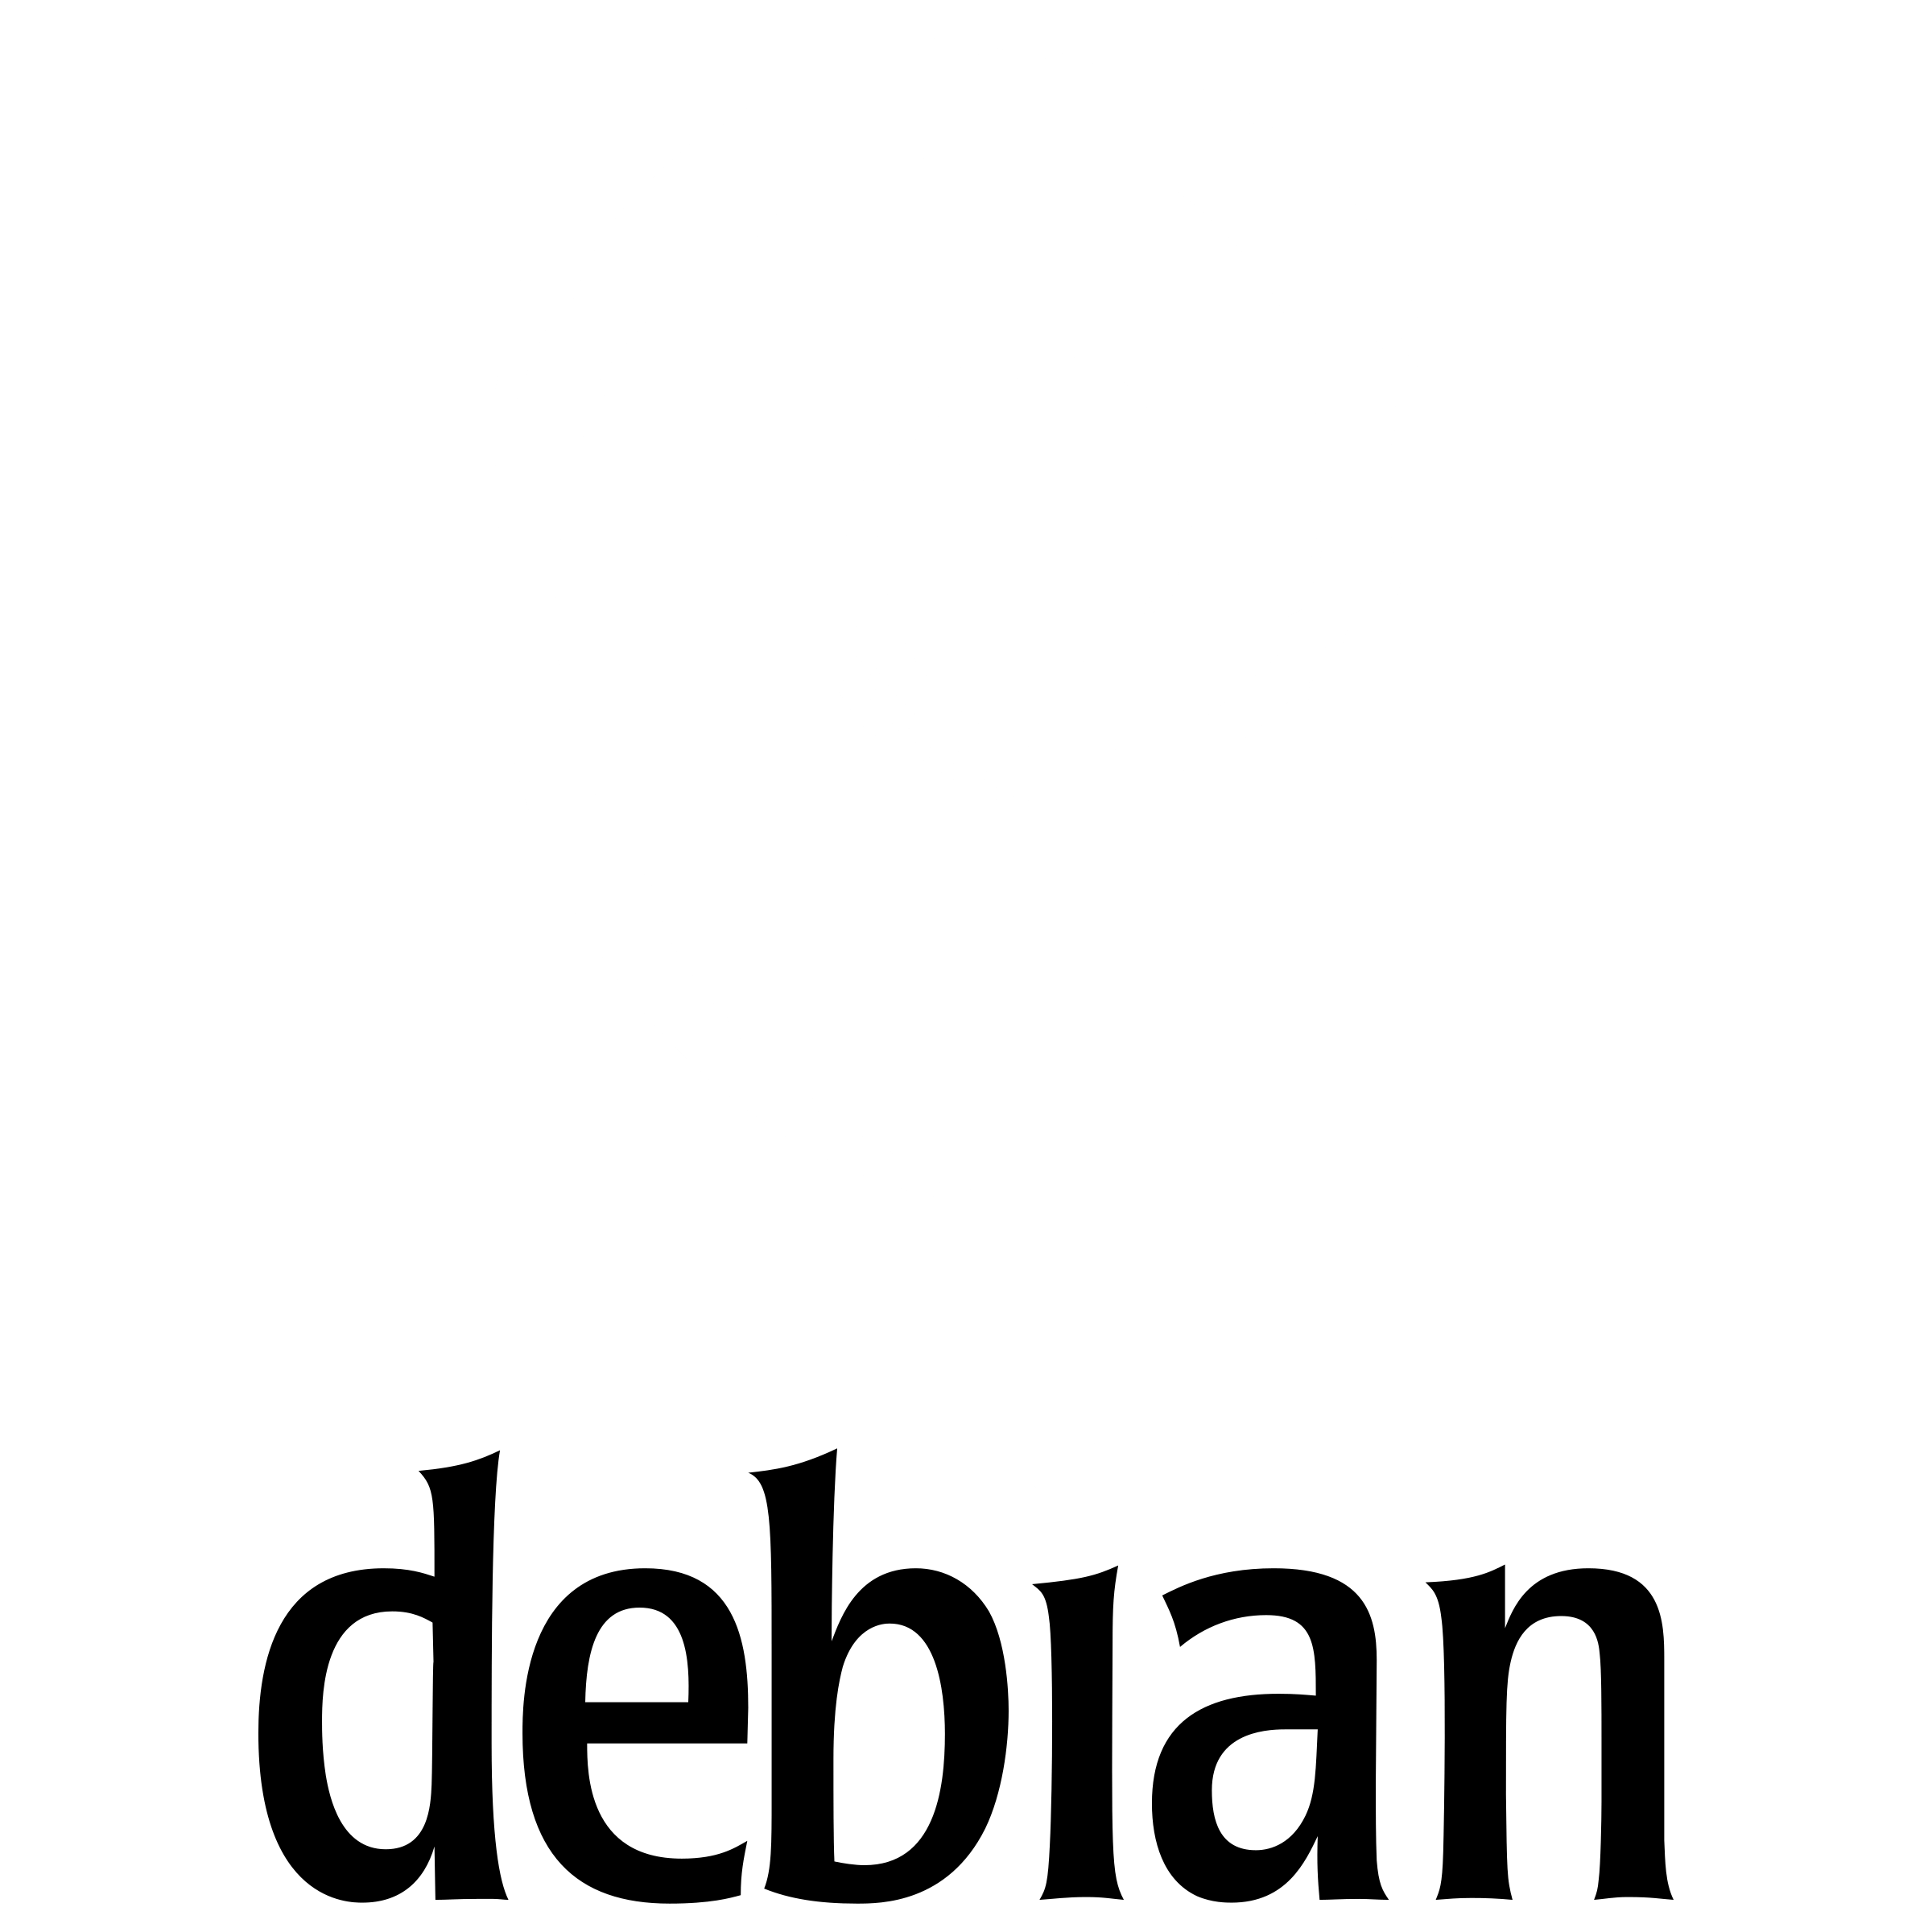 Debian Logo - Debian Logo PNG Transparent & SVG Vector - Freebie Supply